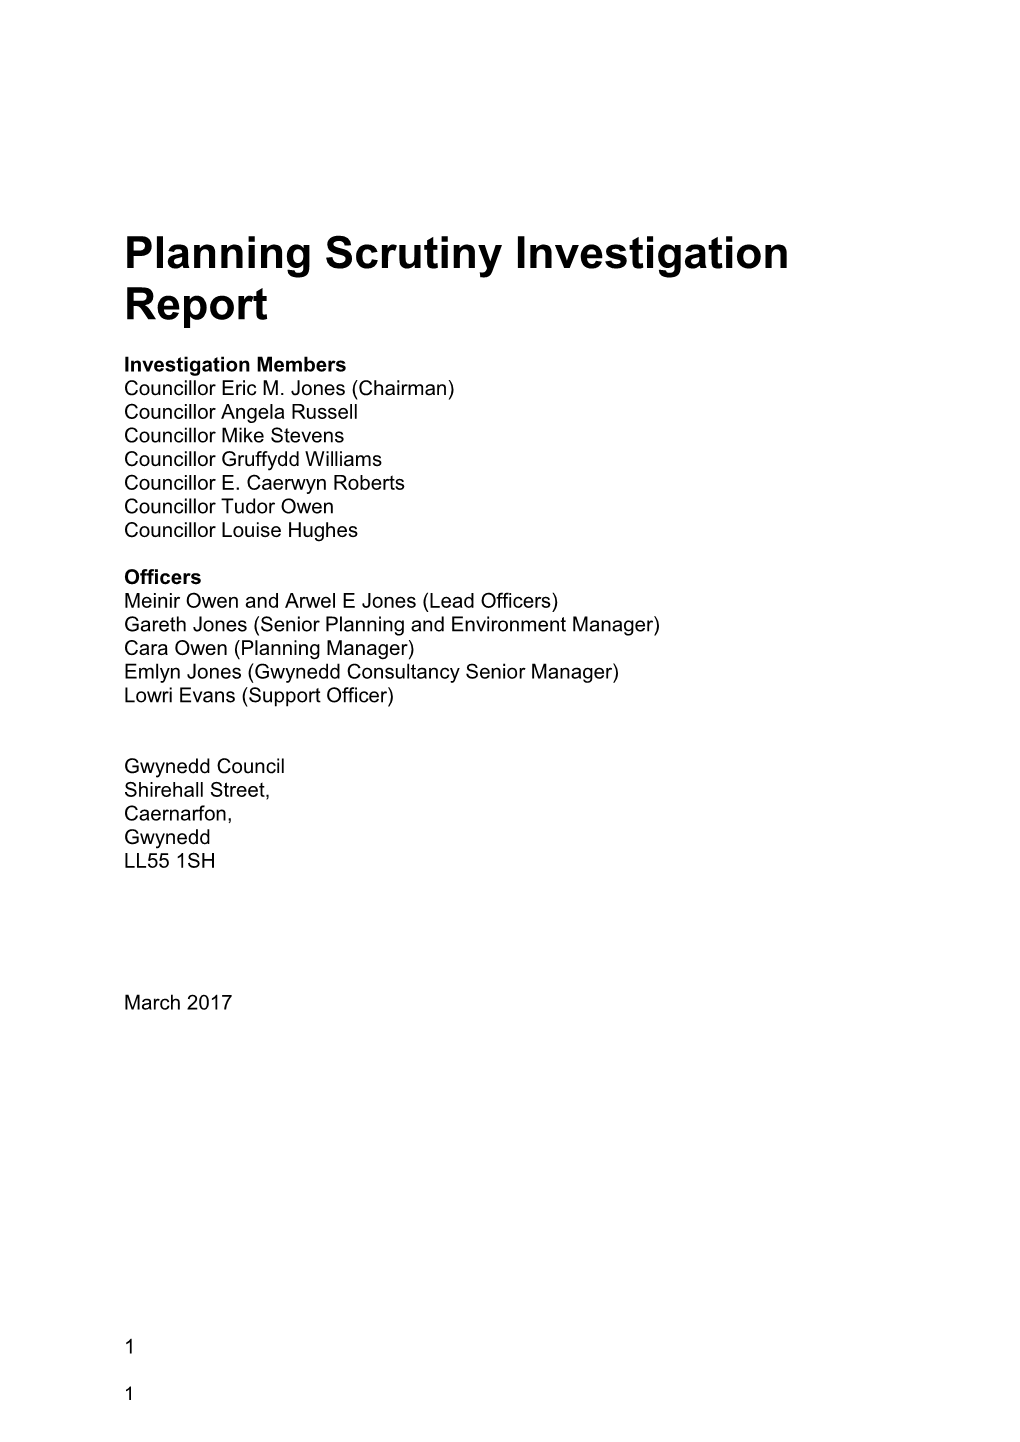 Planning Scrutiny Investigation Report